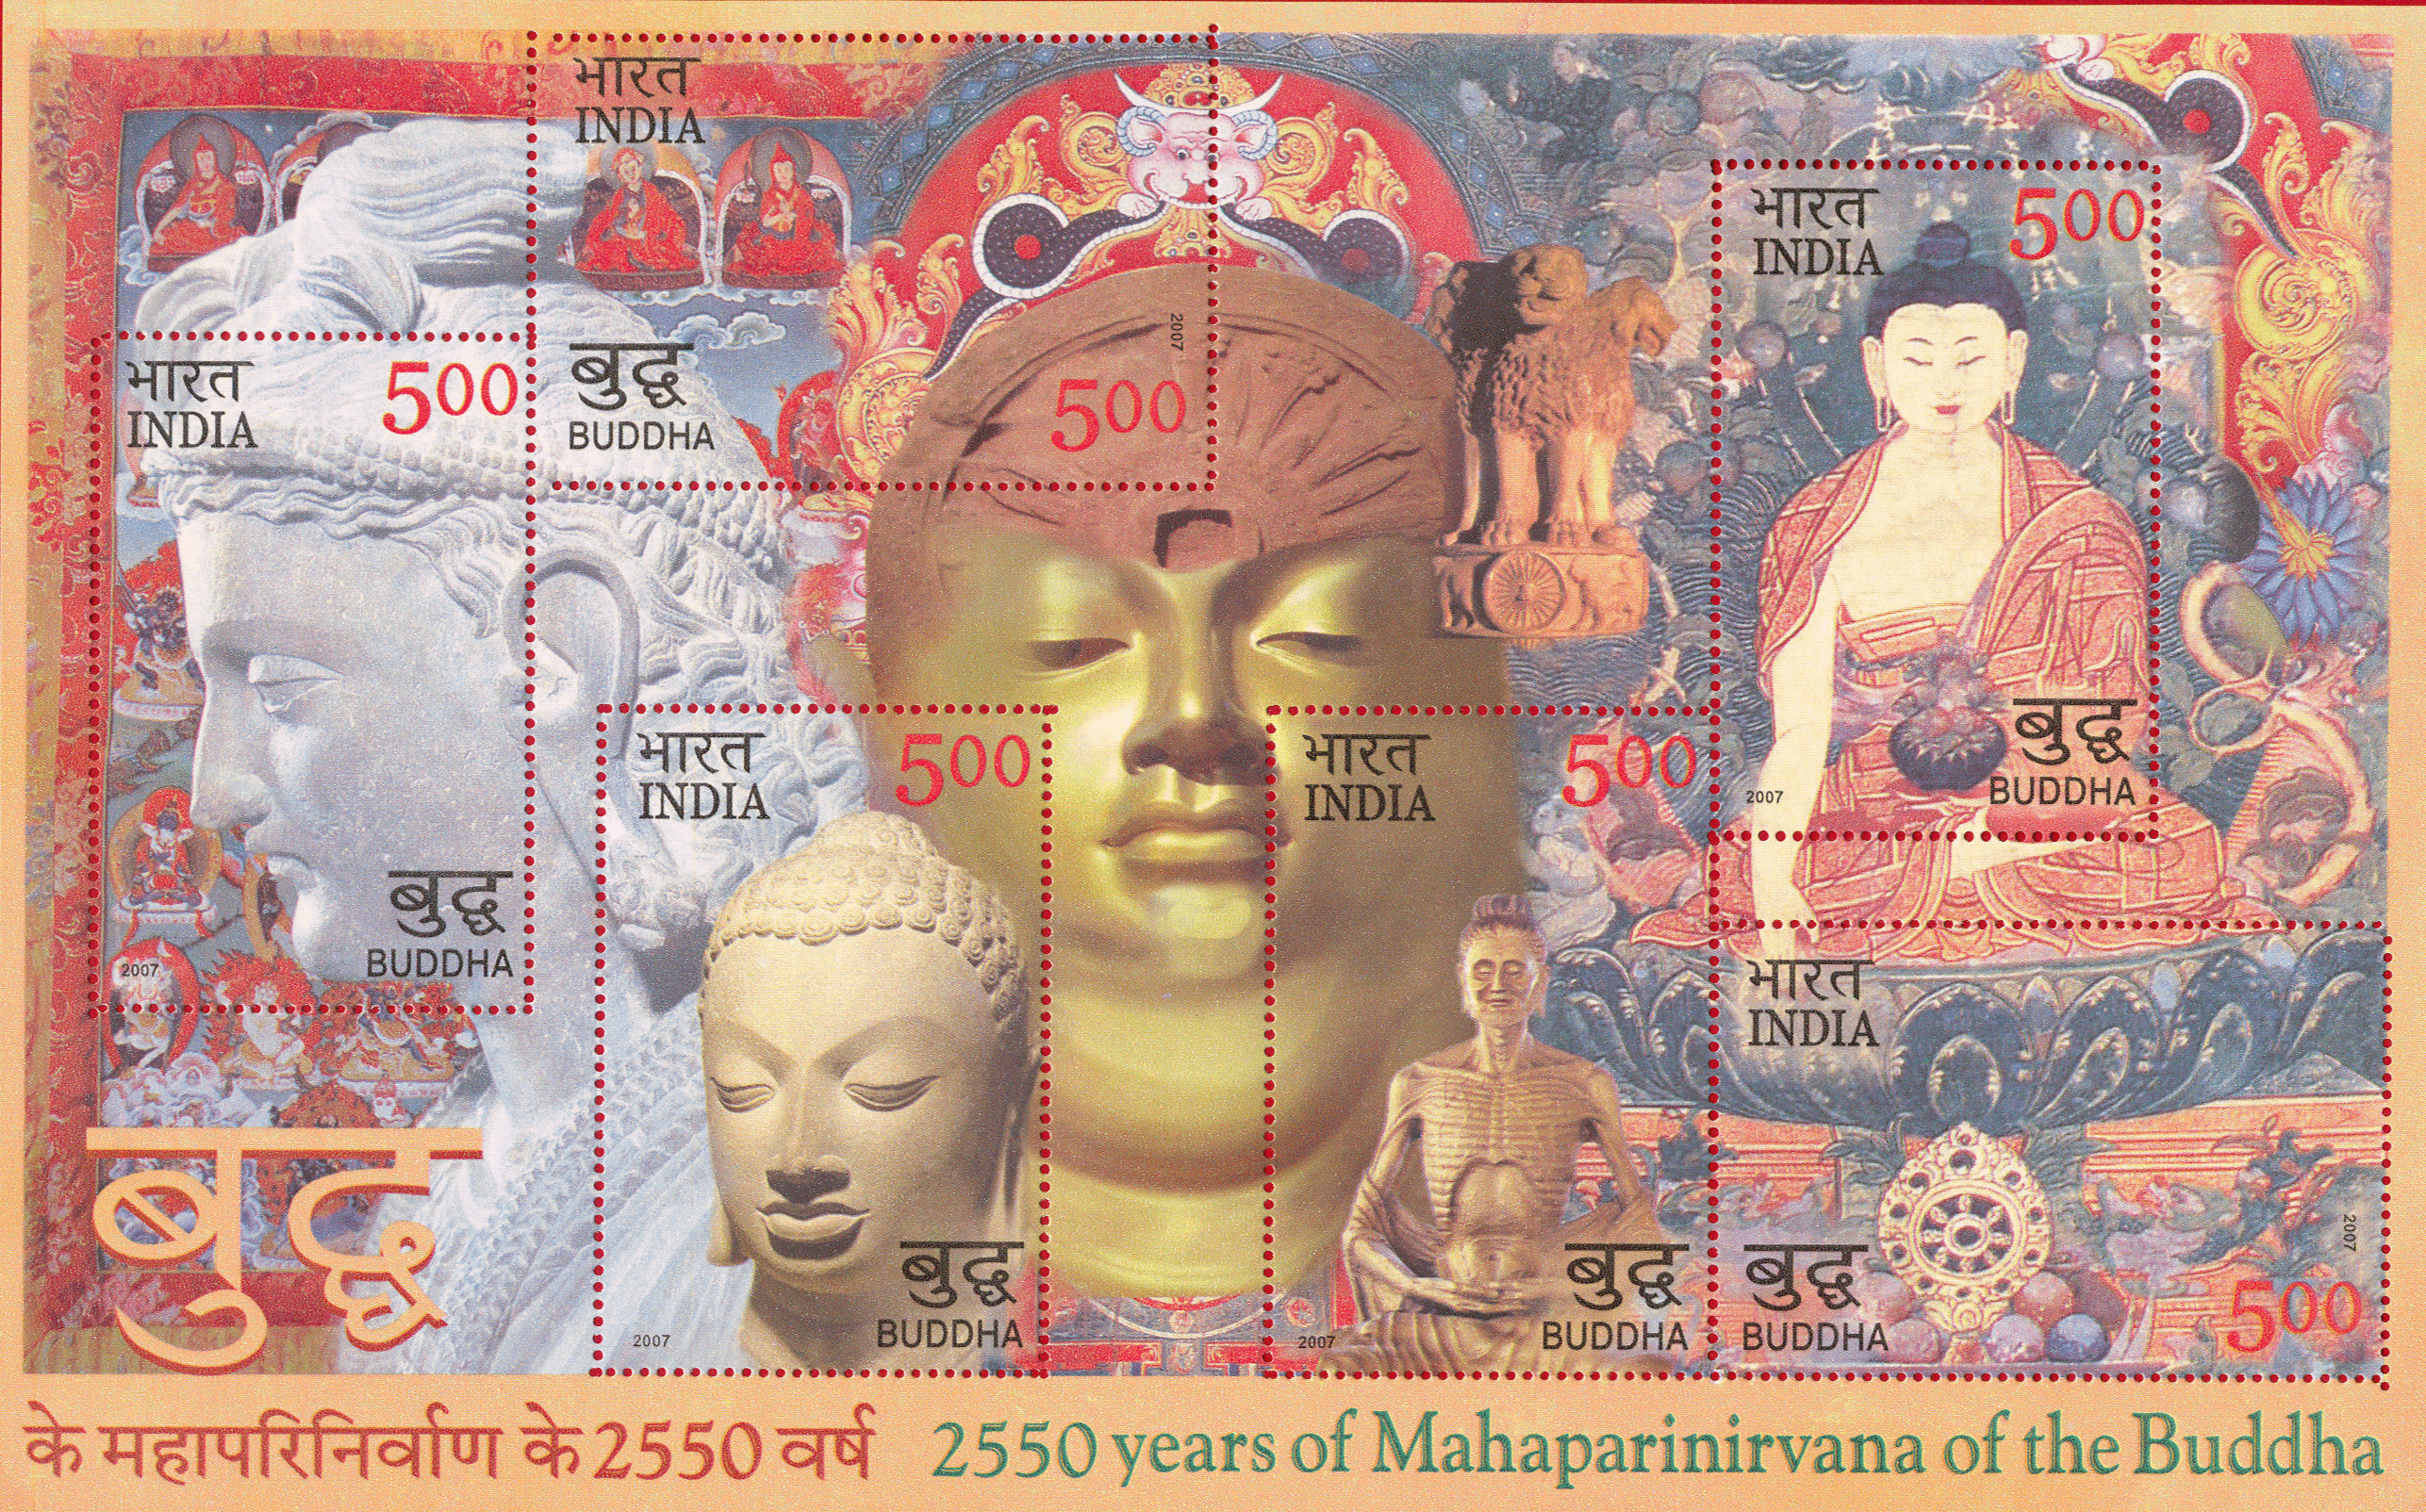 India 2007 Mahaparinirvana of Buddha Miniature Sheet MNH